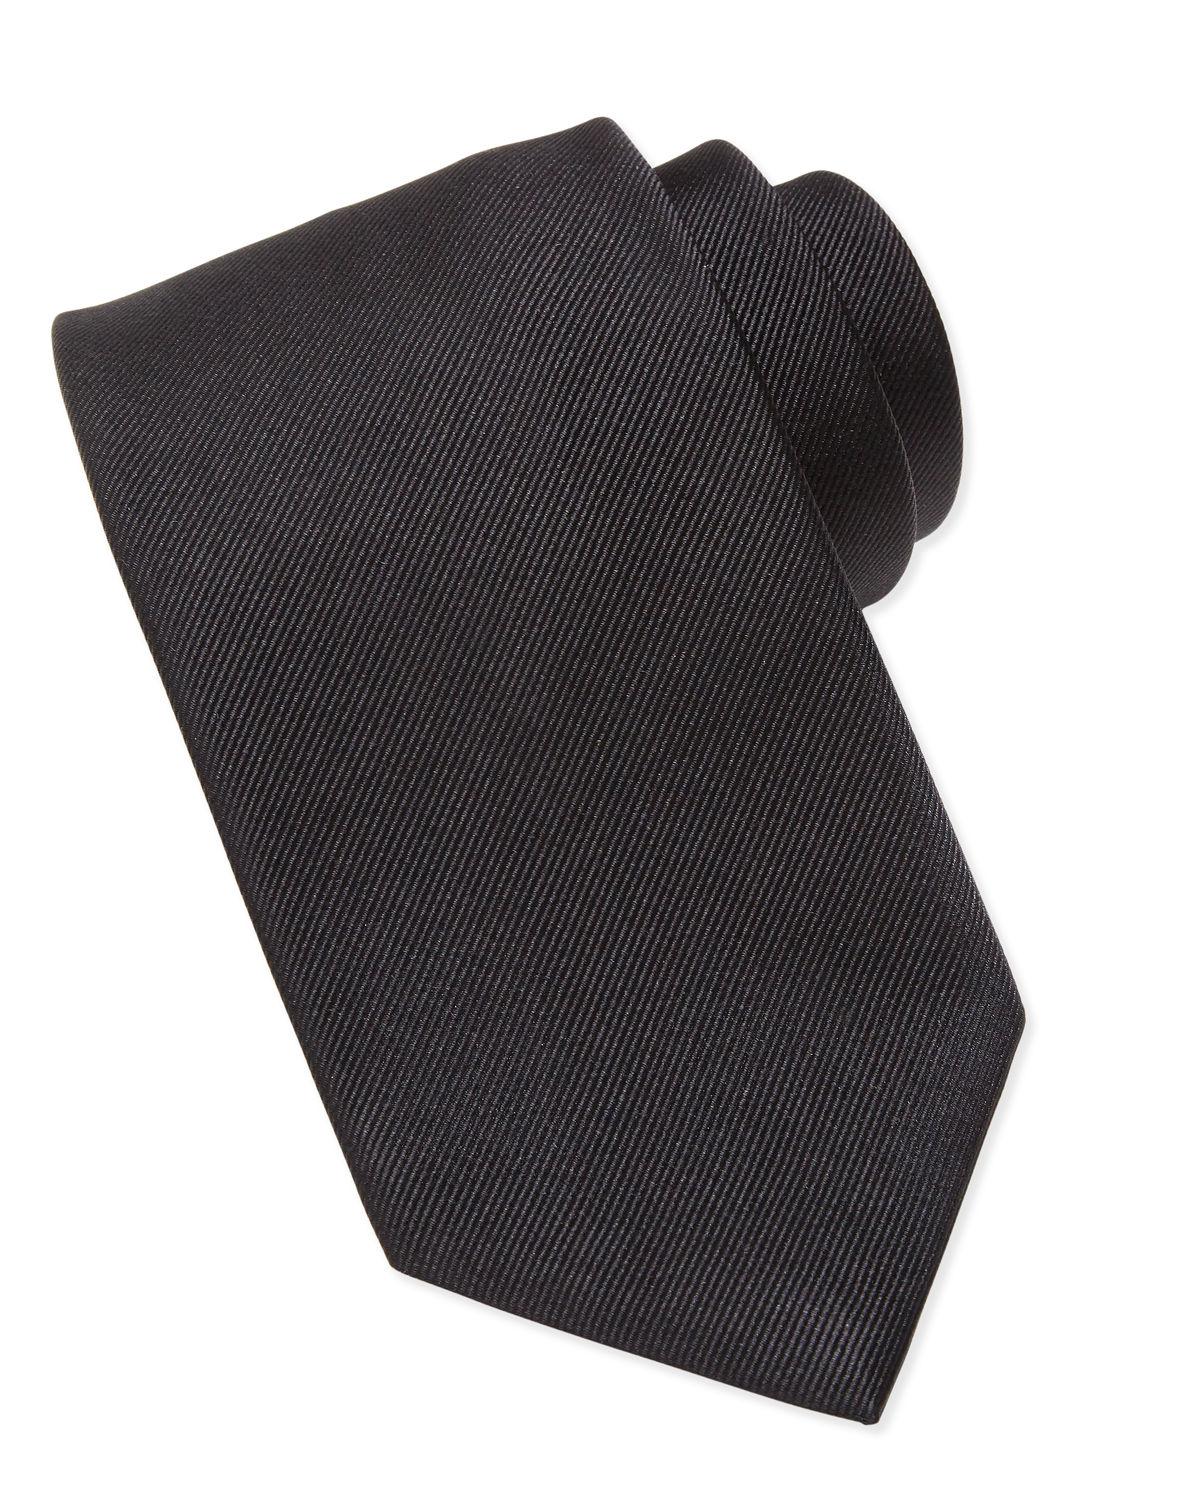 Lyst - Brioni Ribbon Striped Silk Tie in Black for Men